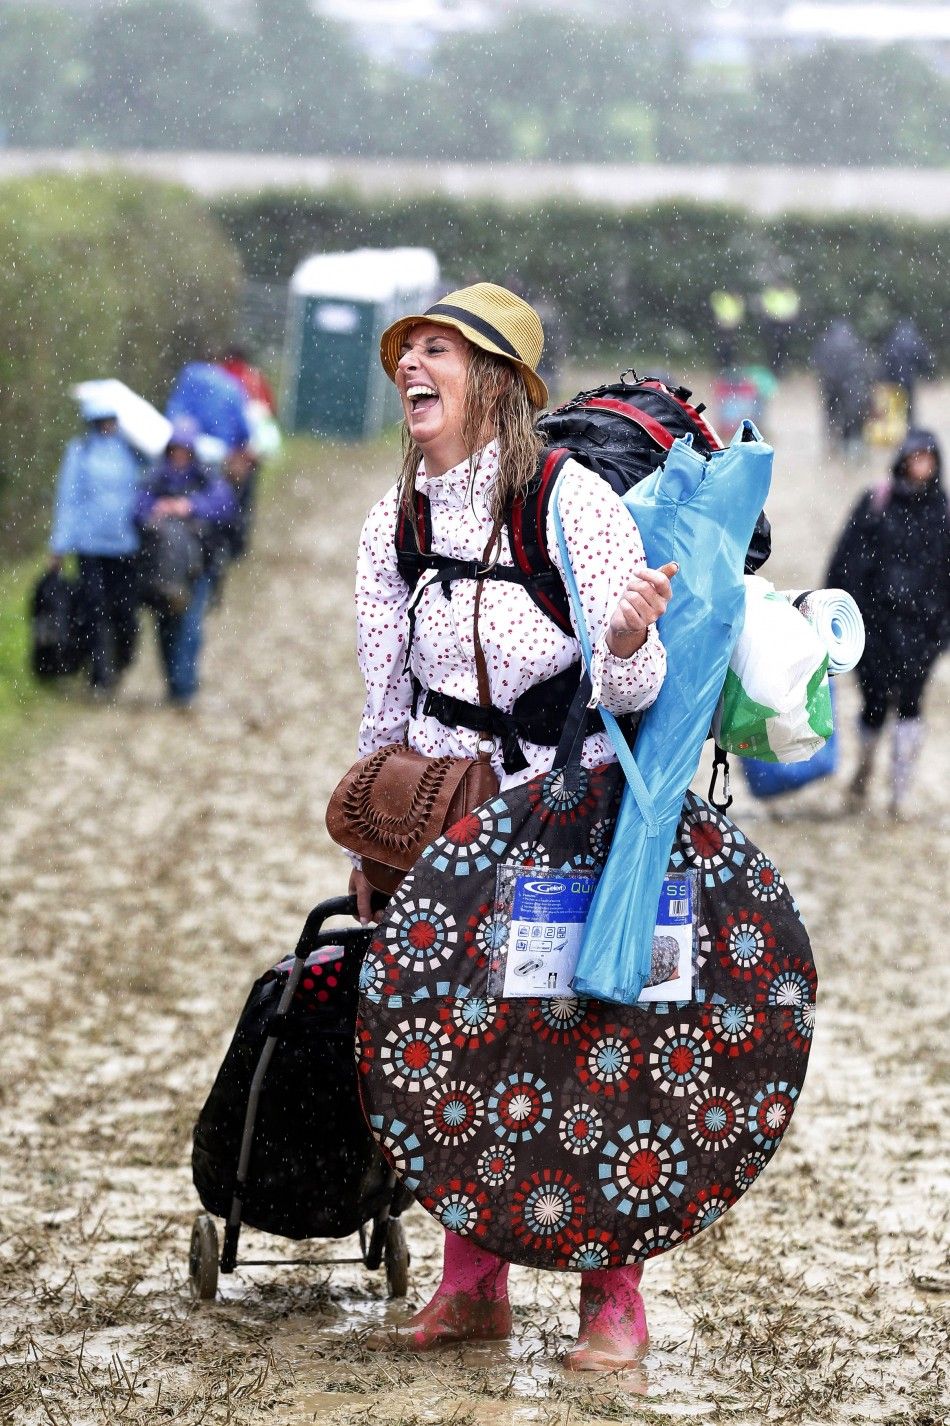 Glastonbury 2011 Revellers tread muddy fields to celebrate event.